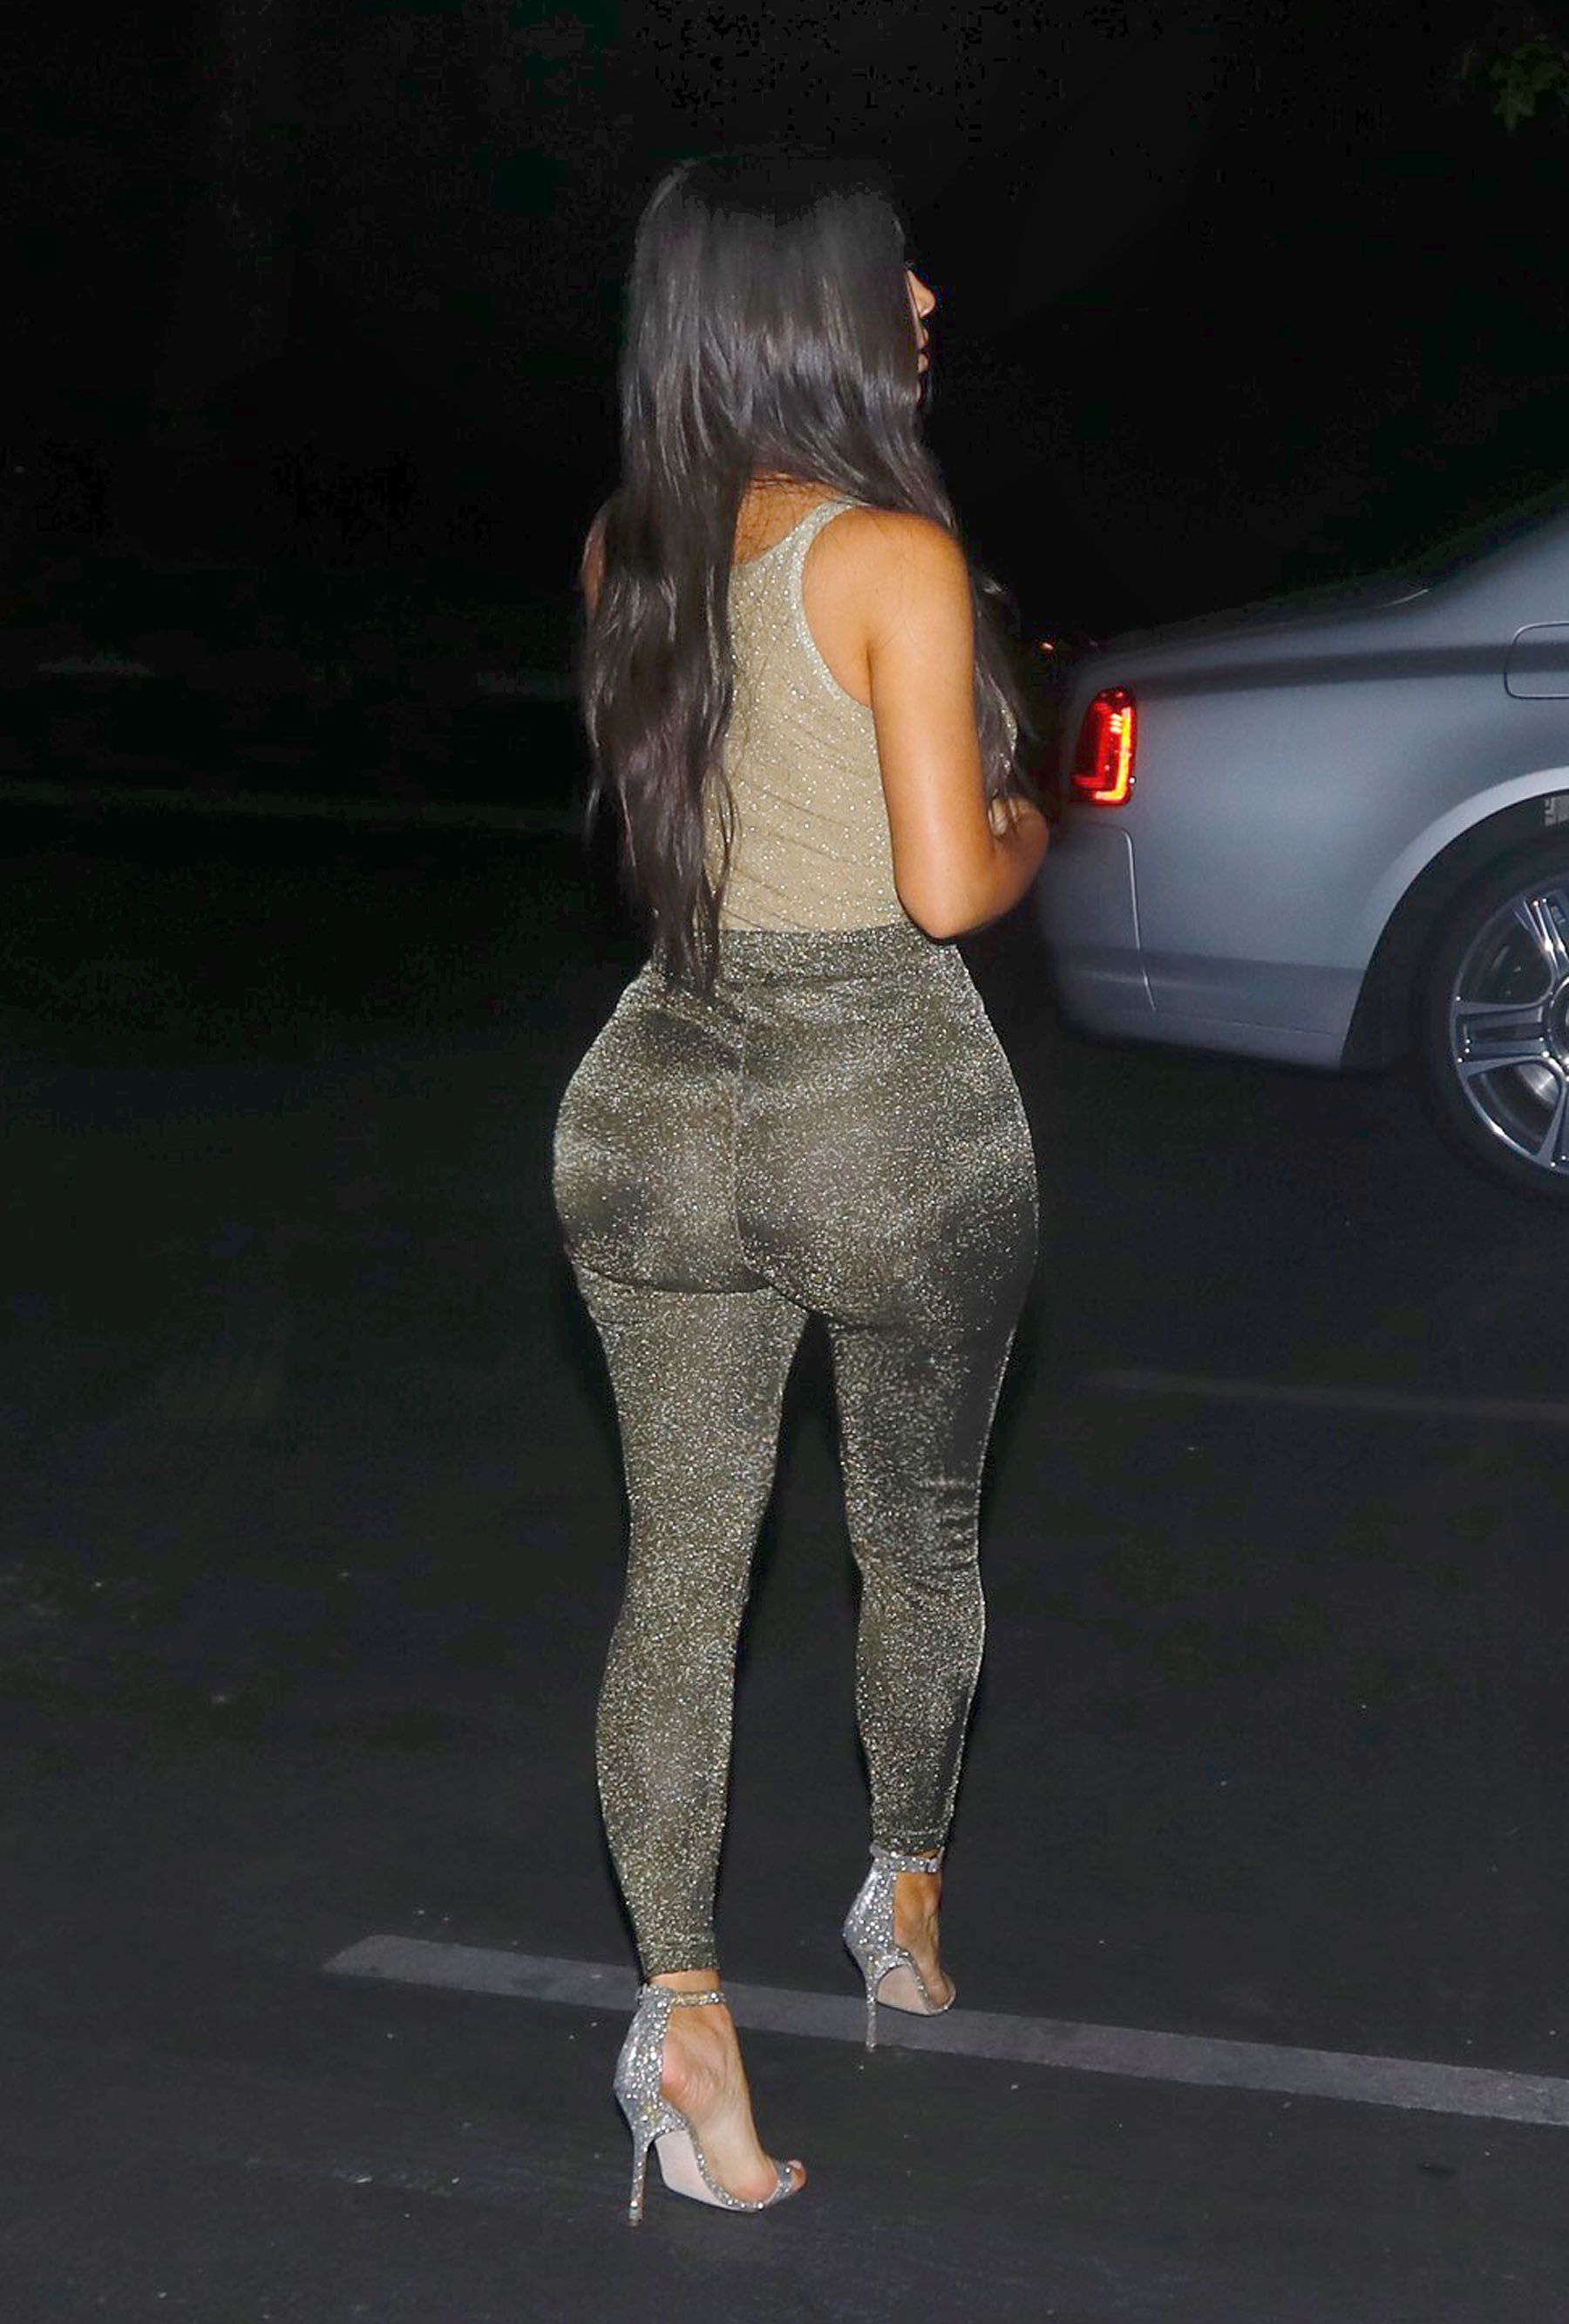 Kim Kardashian See Through (11 Hot Photos)